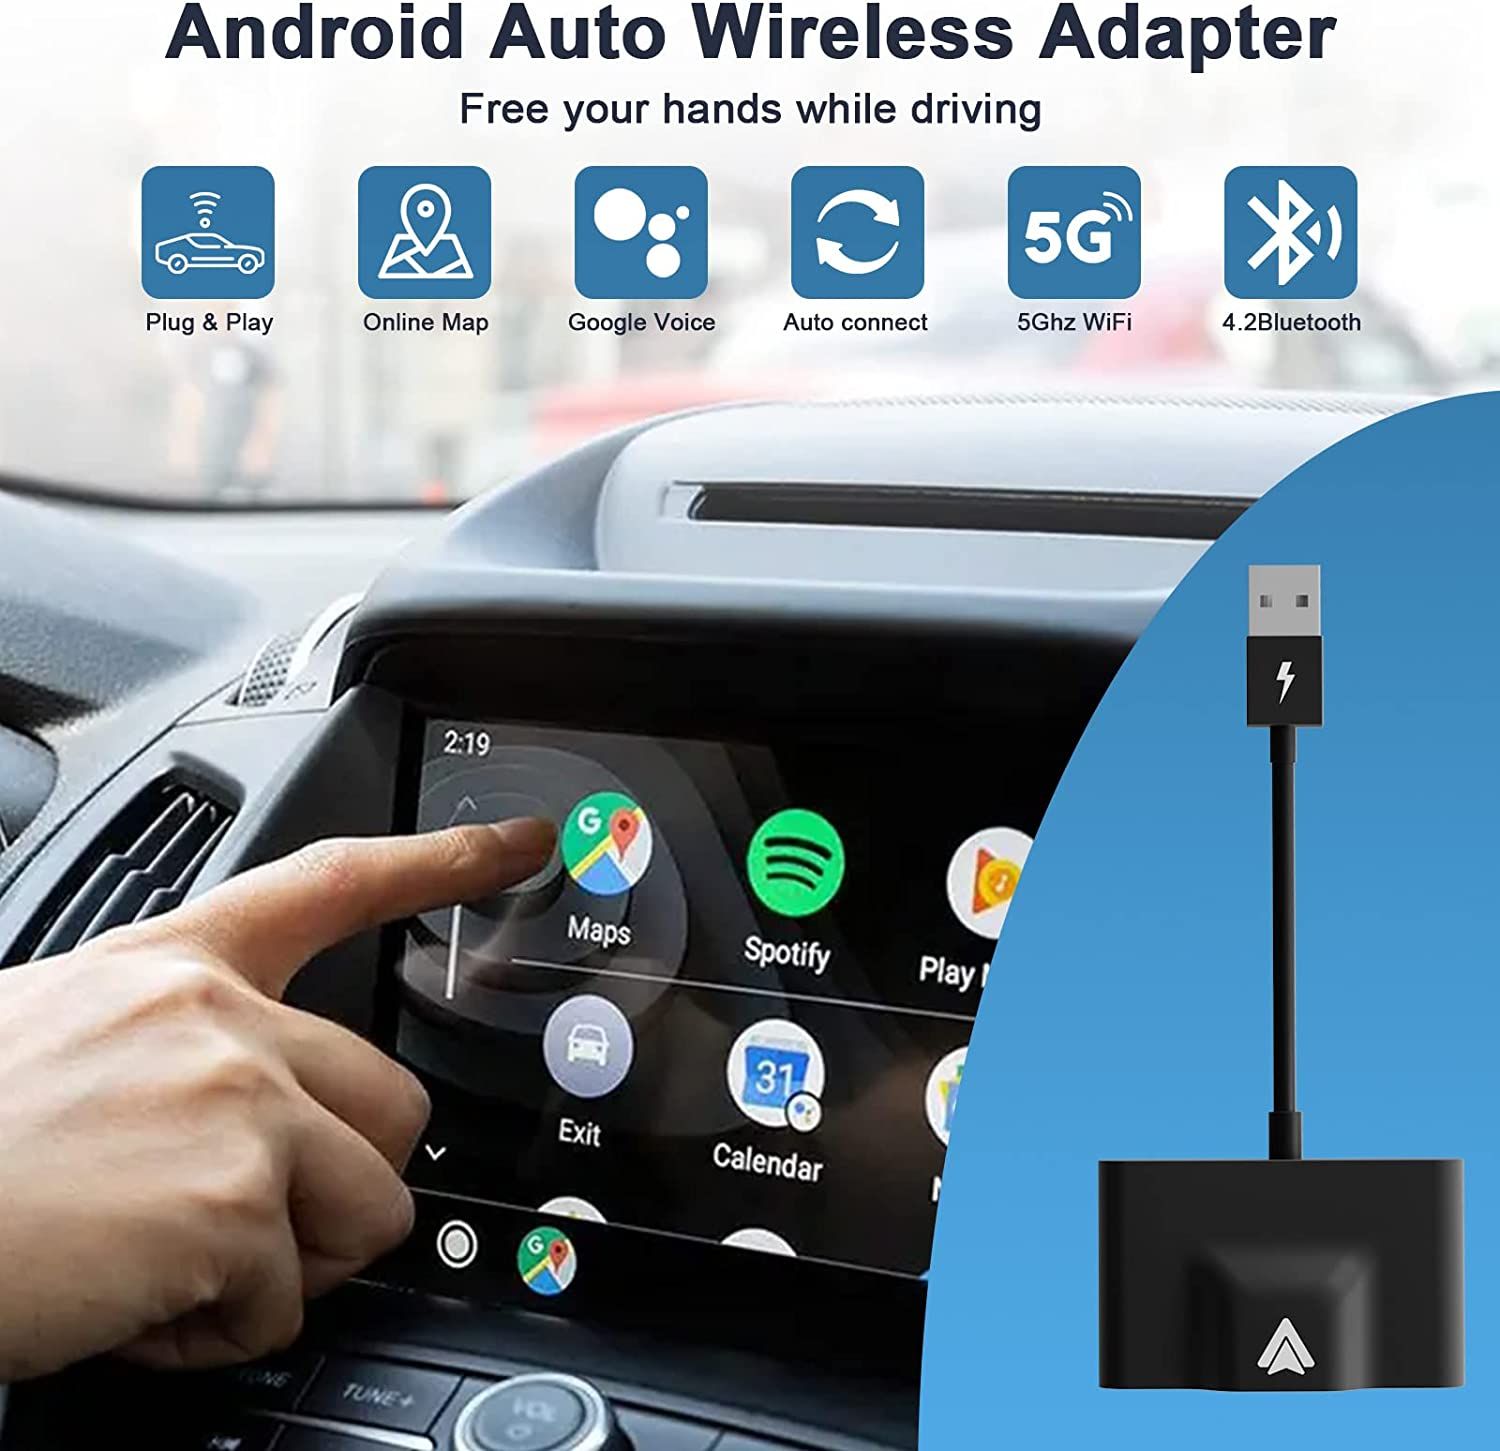 https://www.googlewatchblog.de/wp-content/uploads/android-auto-wireless-adapter.jpg